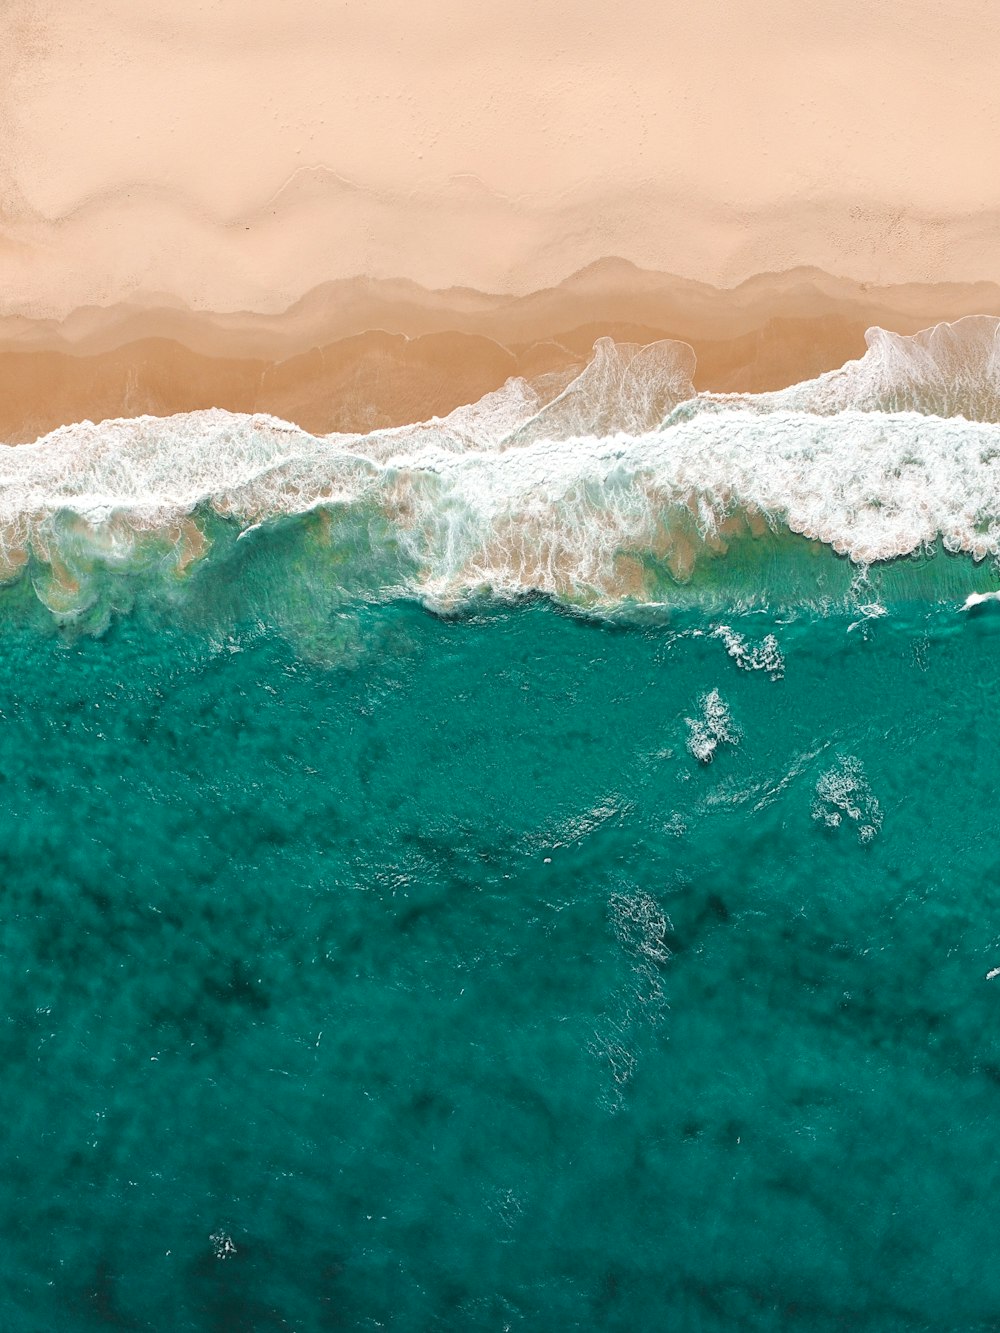 Ocean Wallpapers: Free HD Download [500+ HQ]